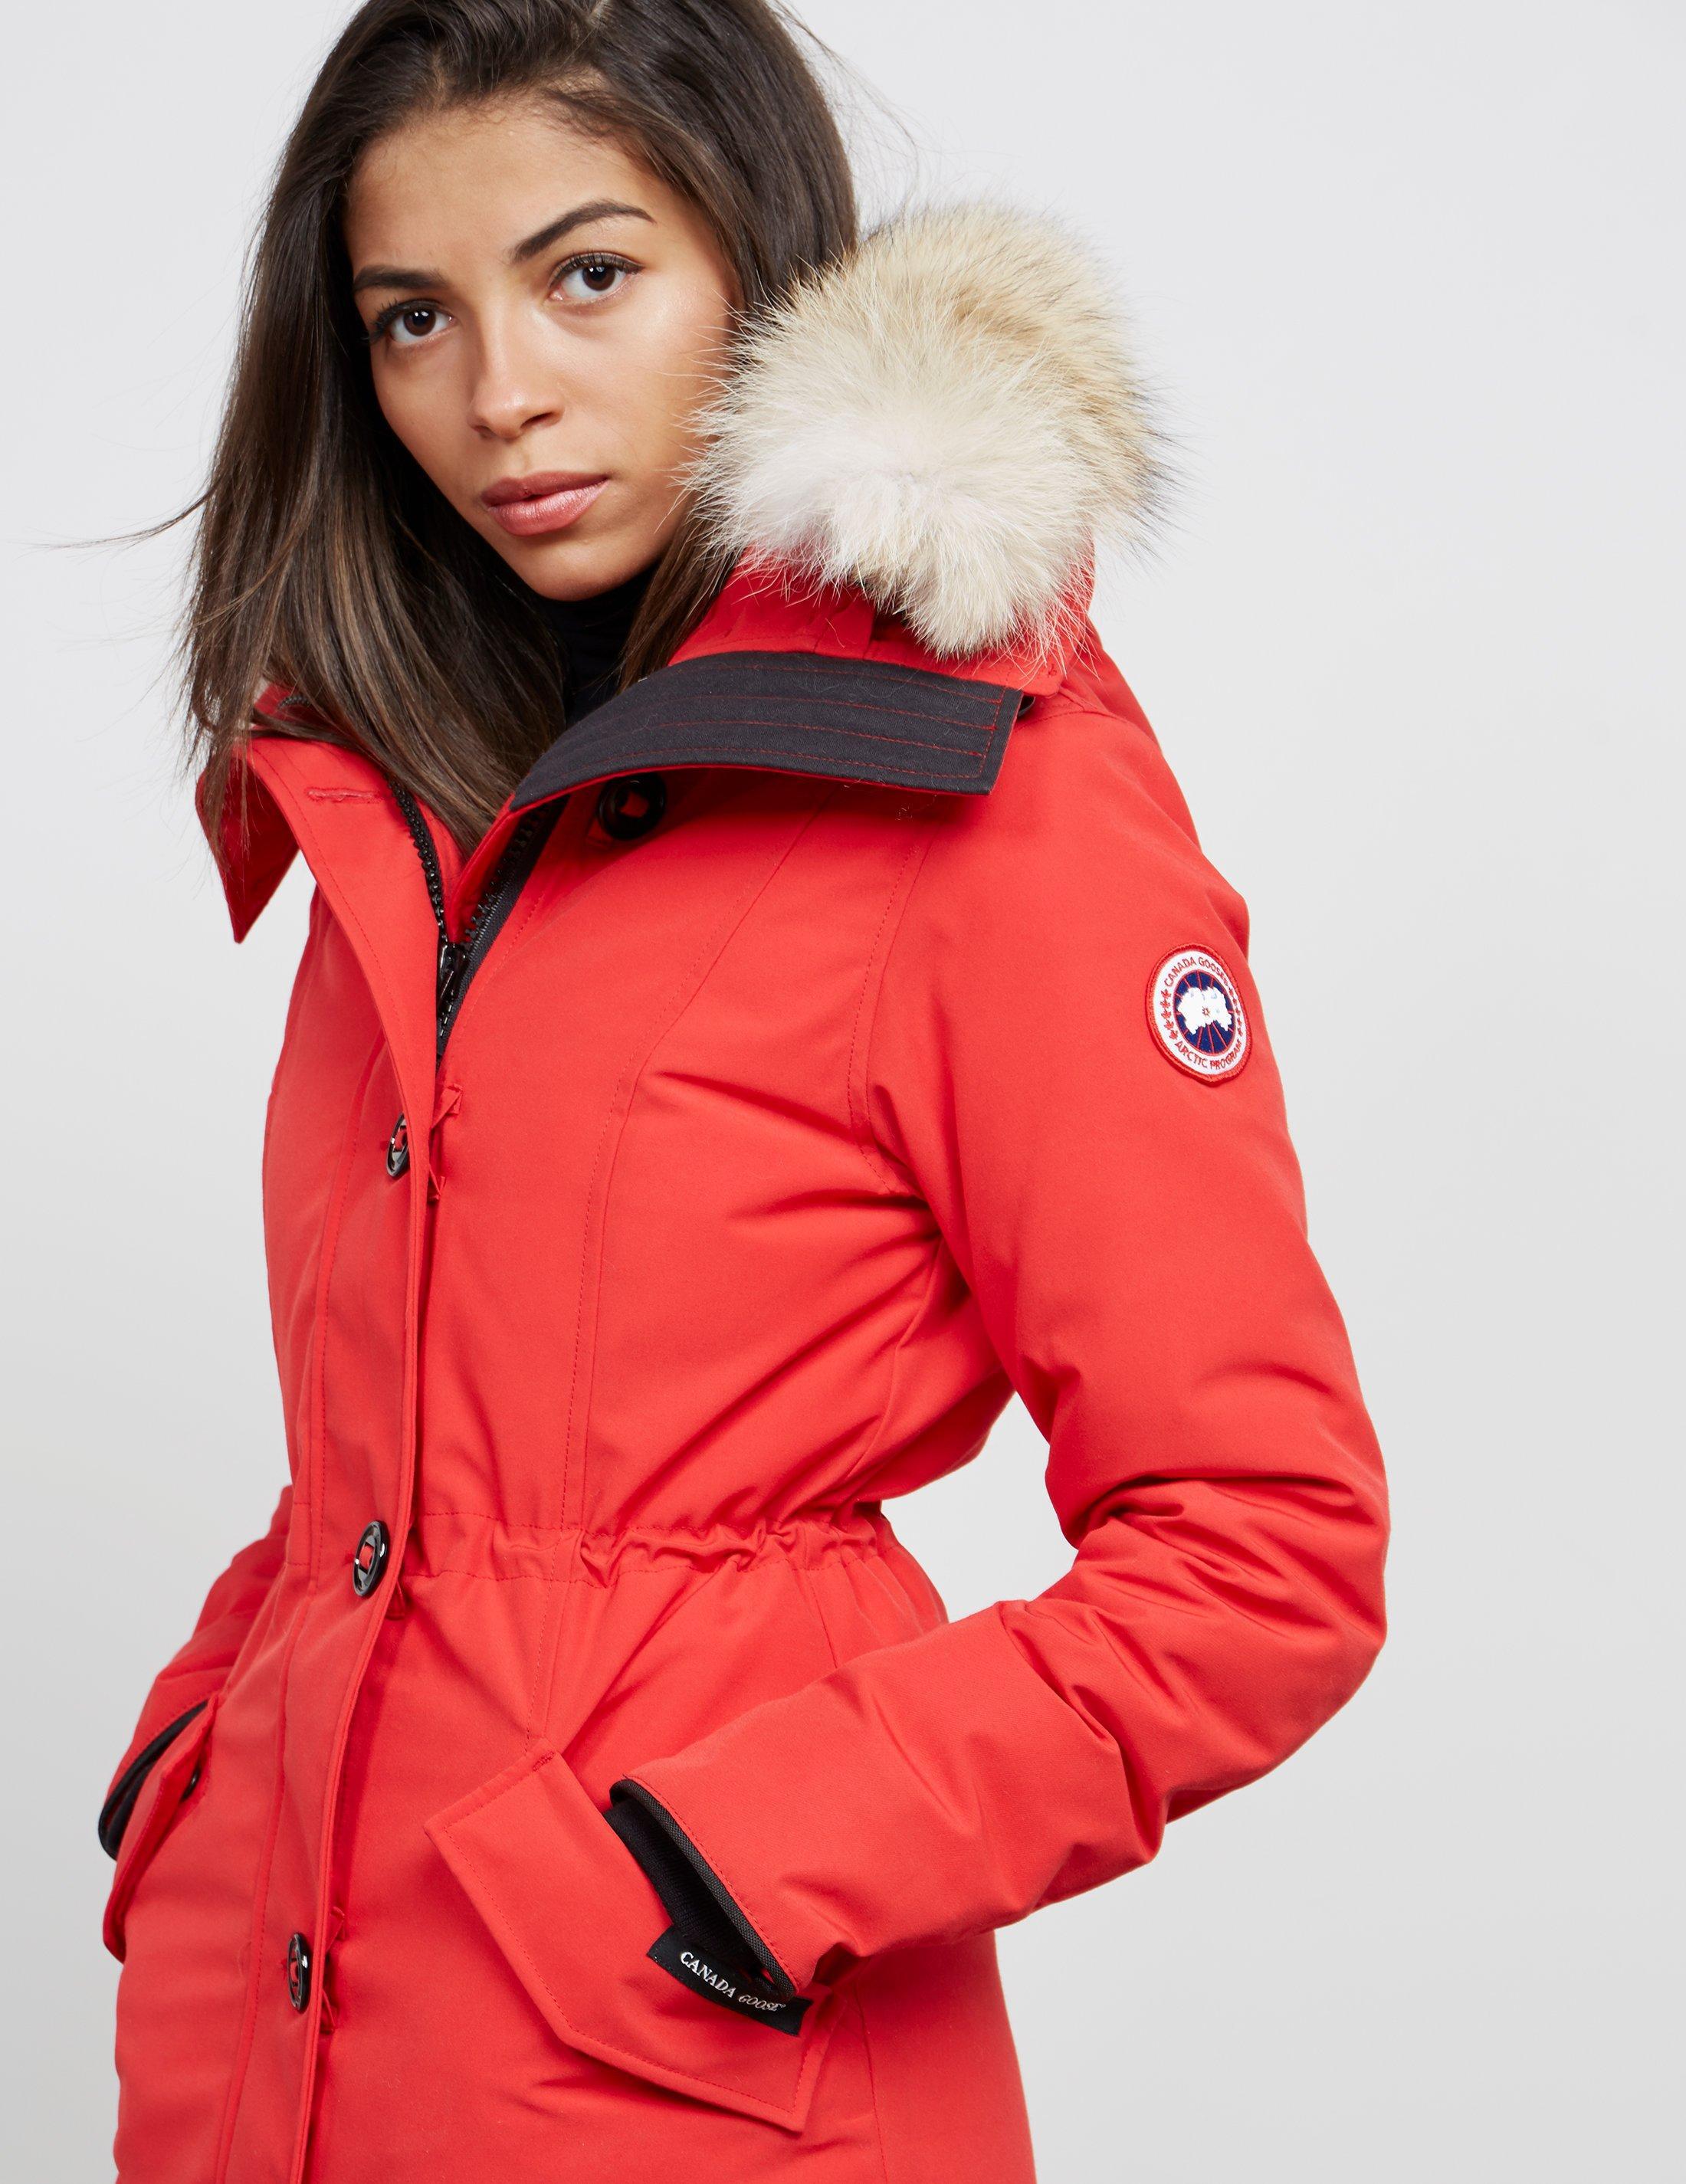 Å 27 Lister Over Canada Goose Jacket Women Women S Canada Goose Parkas Coats Jackets Men S